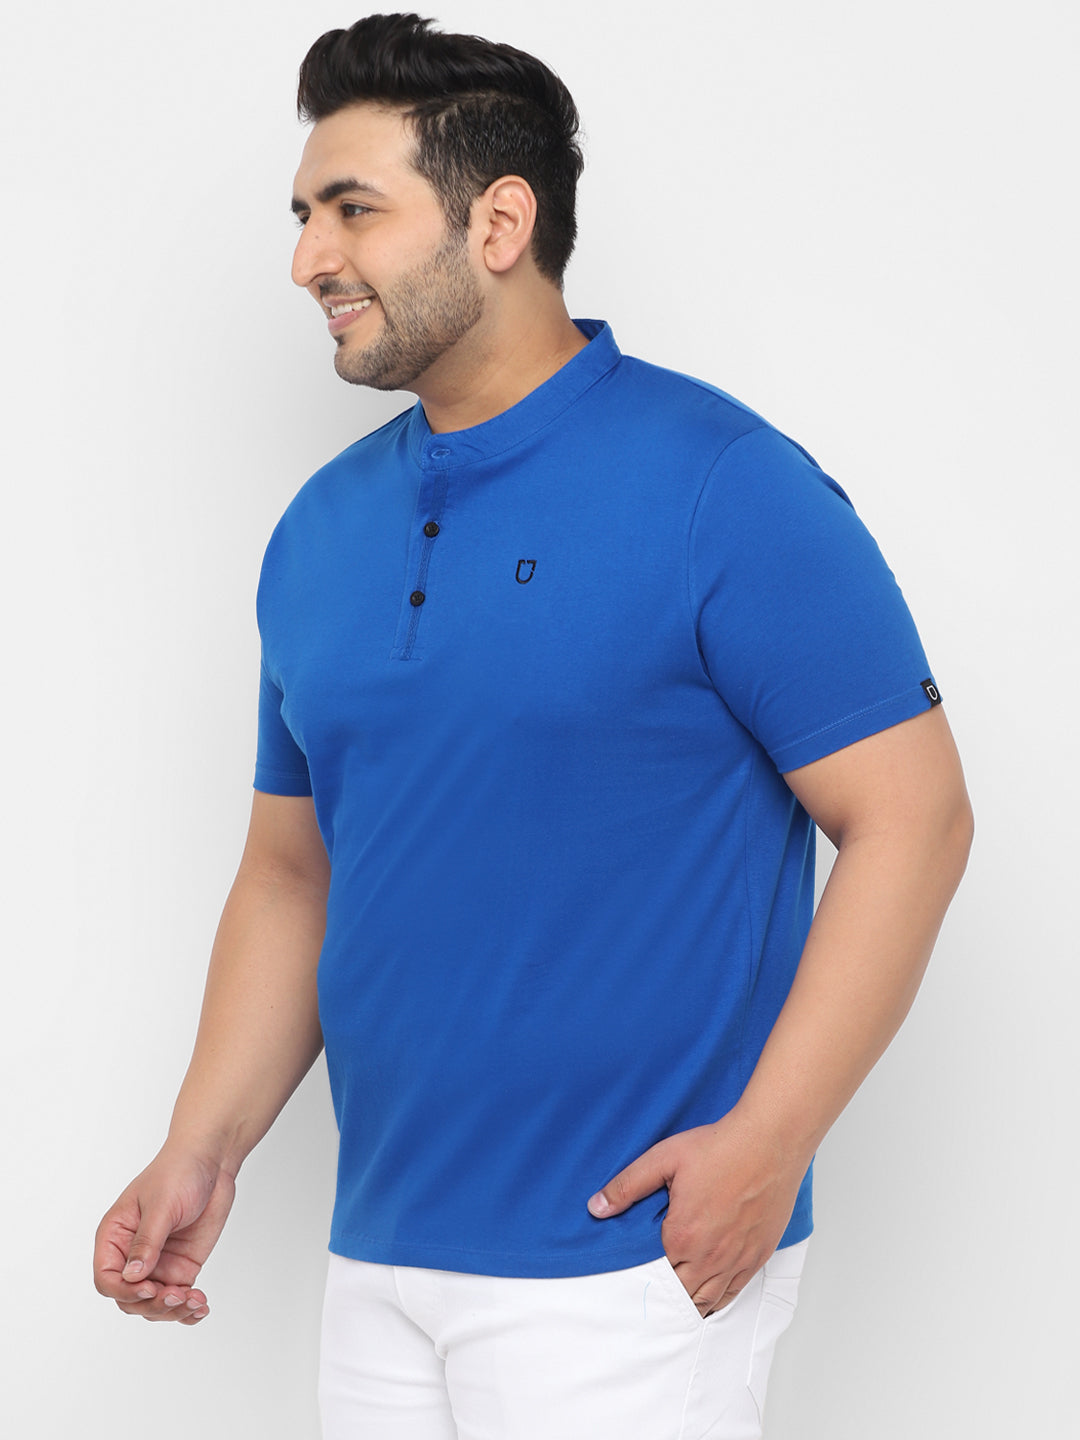 Men's Royal Blue Solid Mandarin Collar Regular Fit Cotton T-Shirt